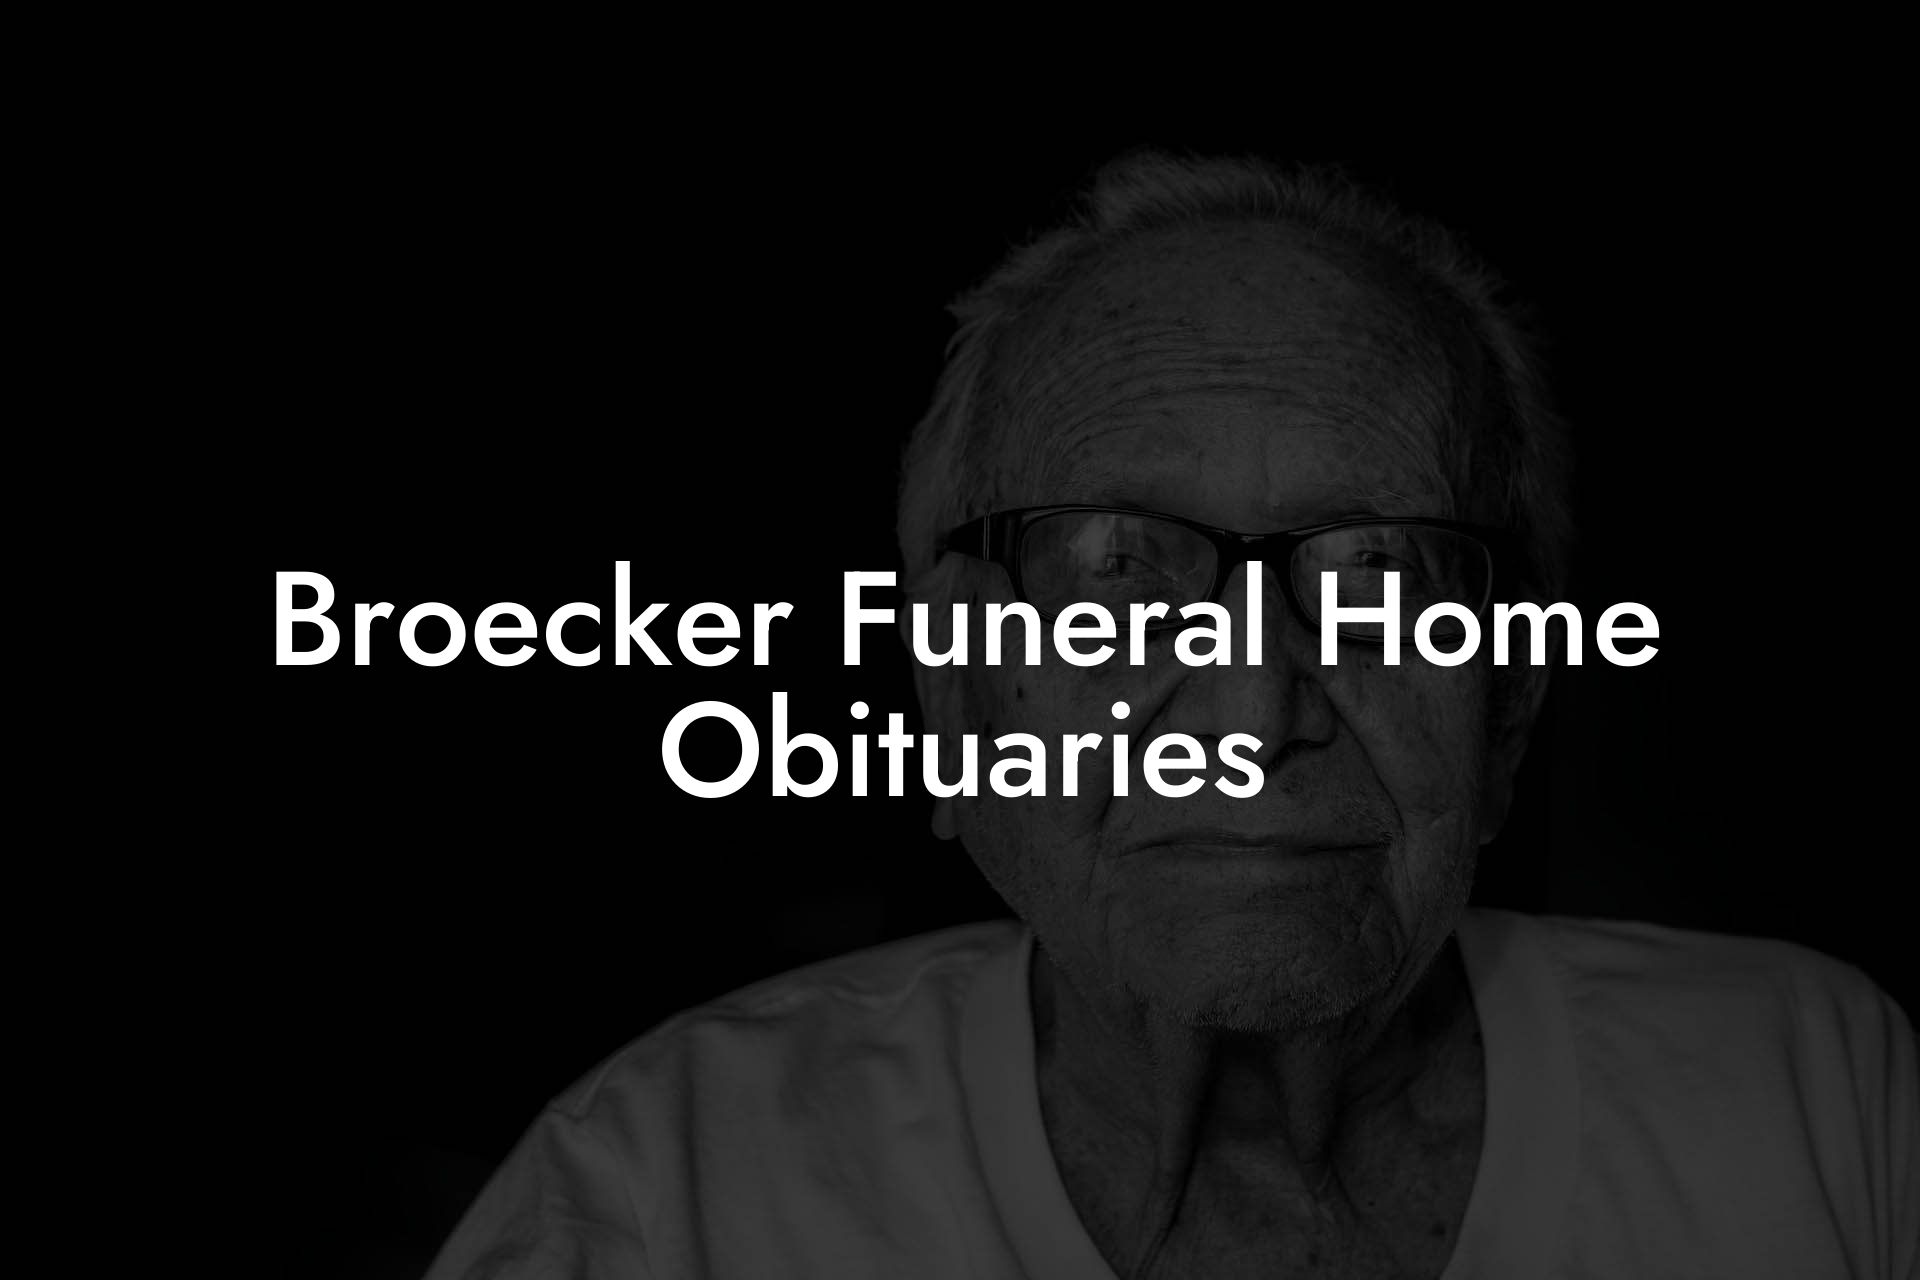 Broecker Funeral Home Obituaries